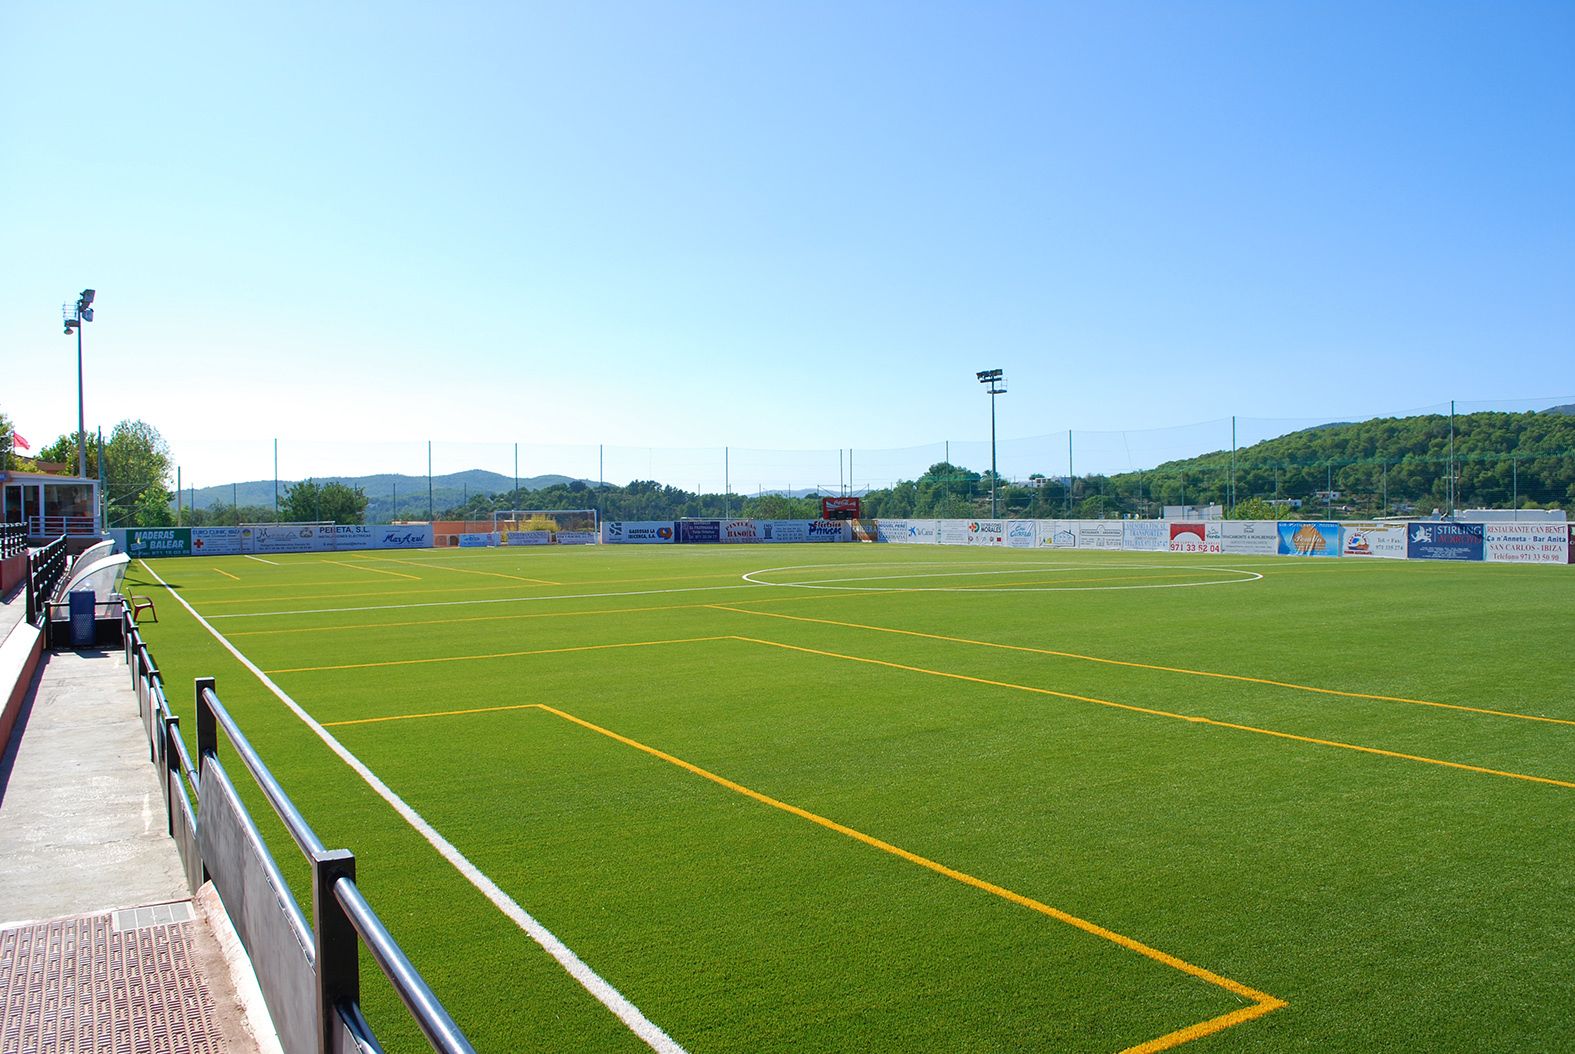 Sant Carles de Peralta municipal sports facilities